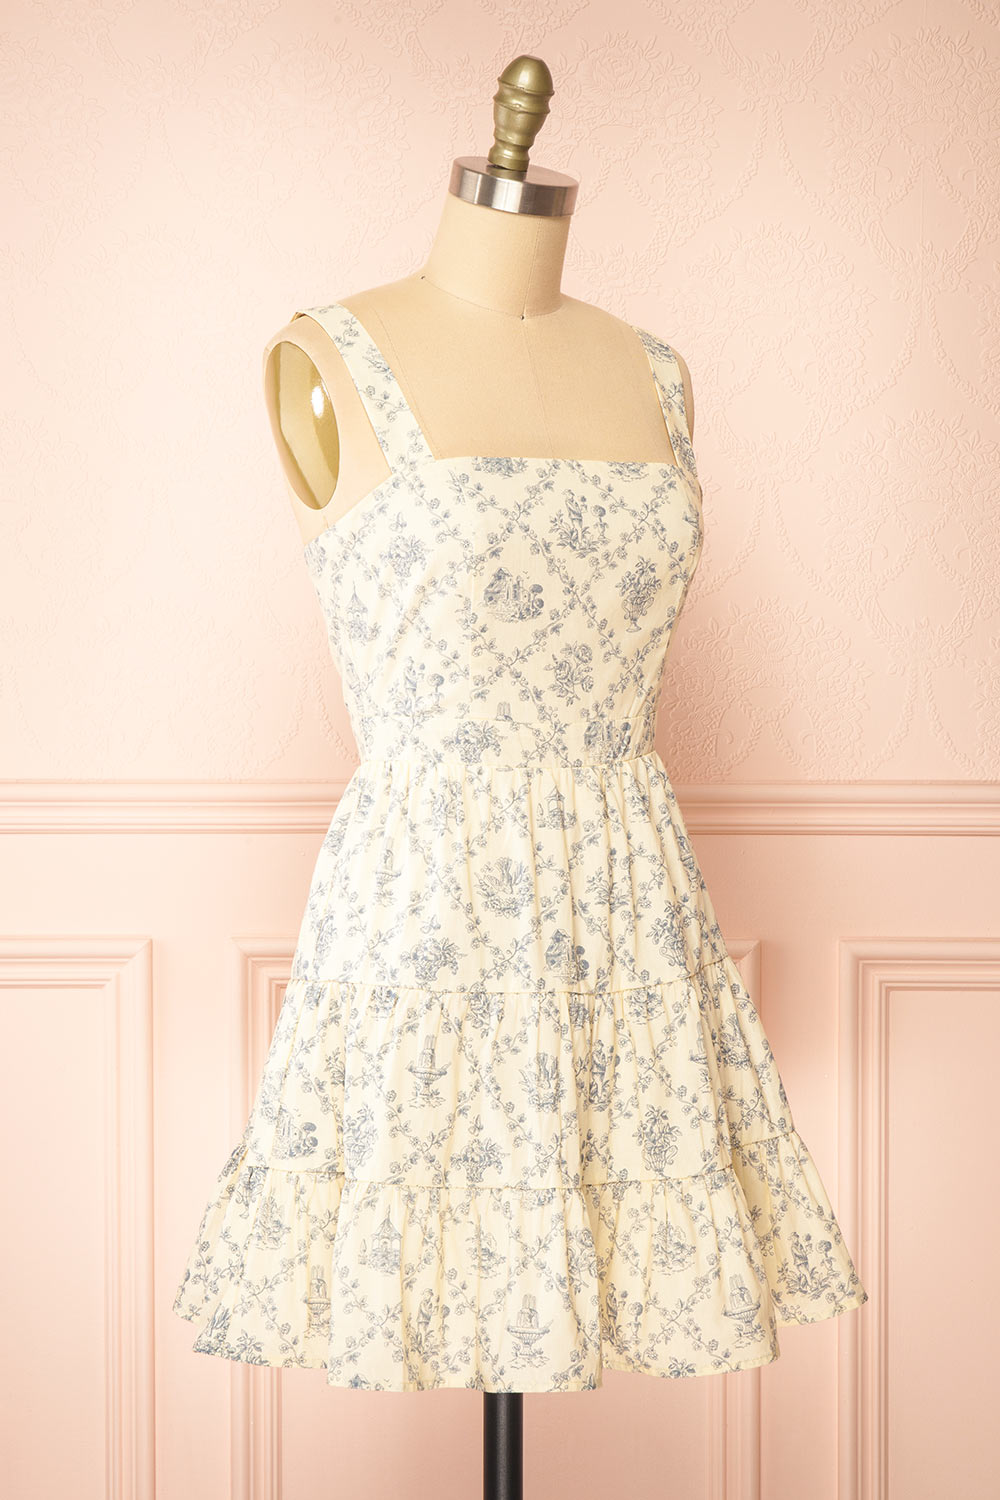 Selvina Short Beige Dress w/ Vintage Motif | Boutique 1861  side view